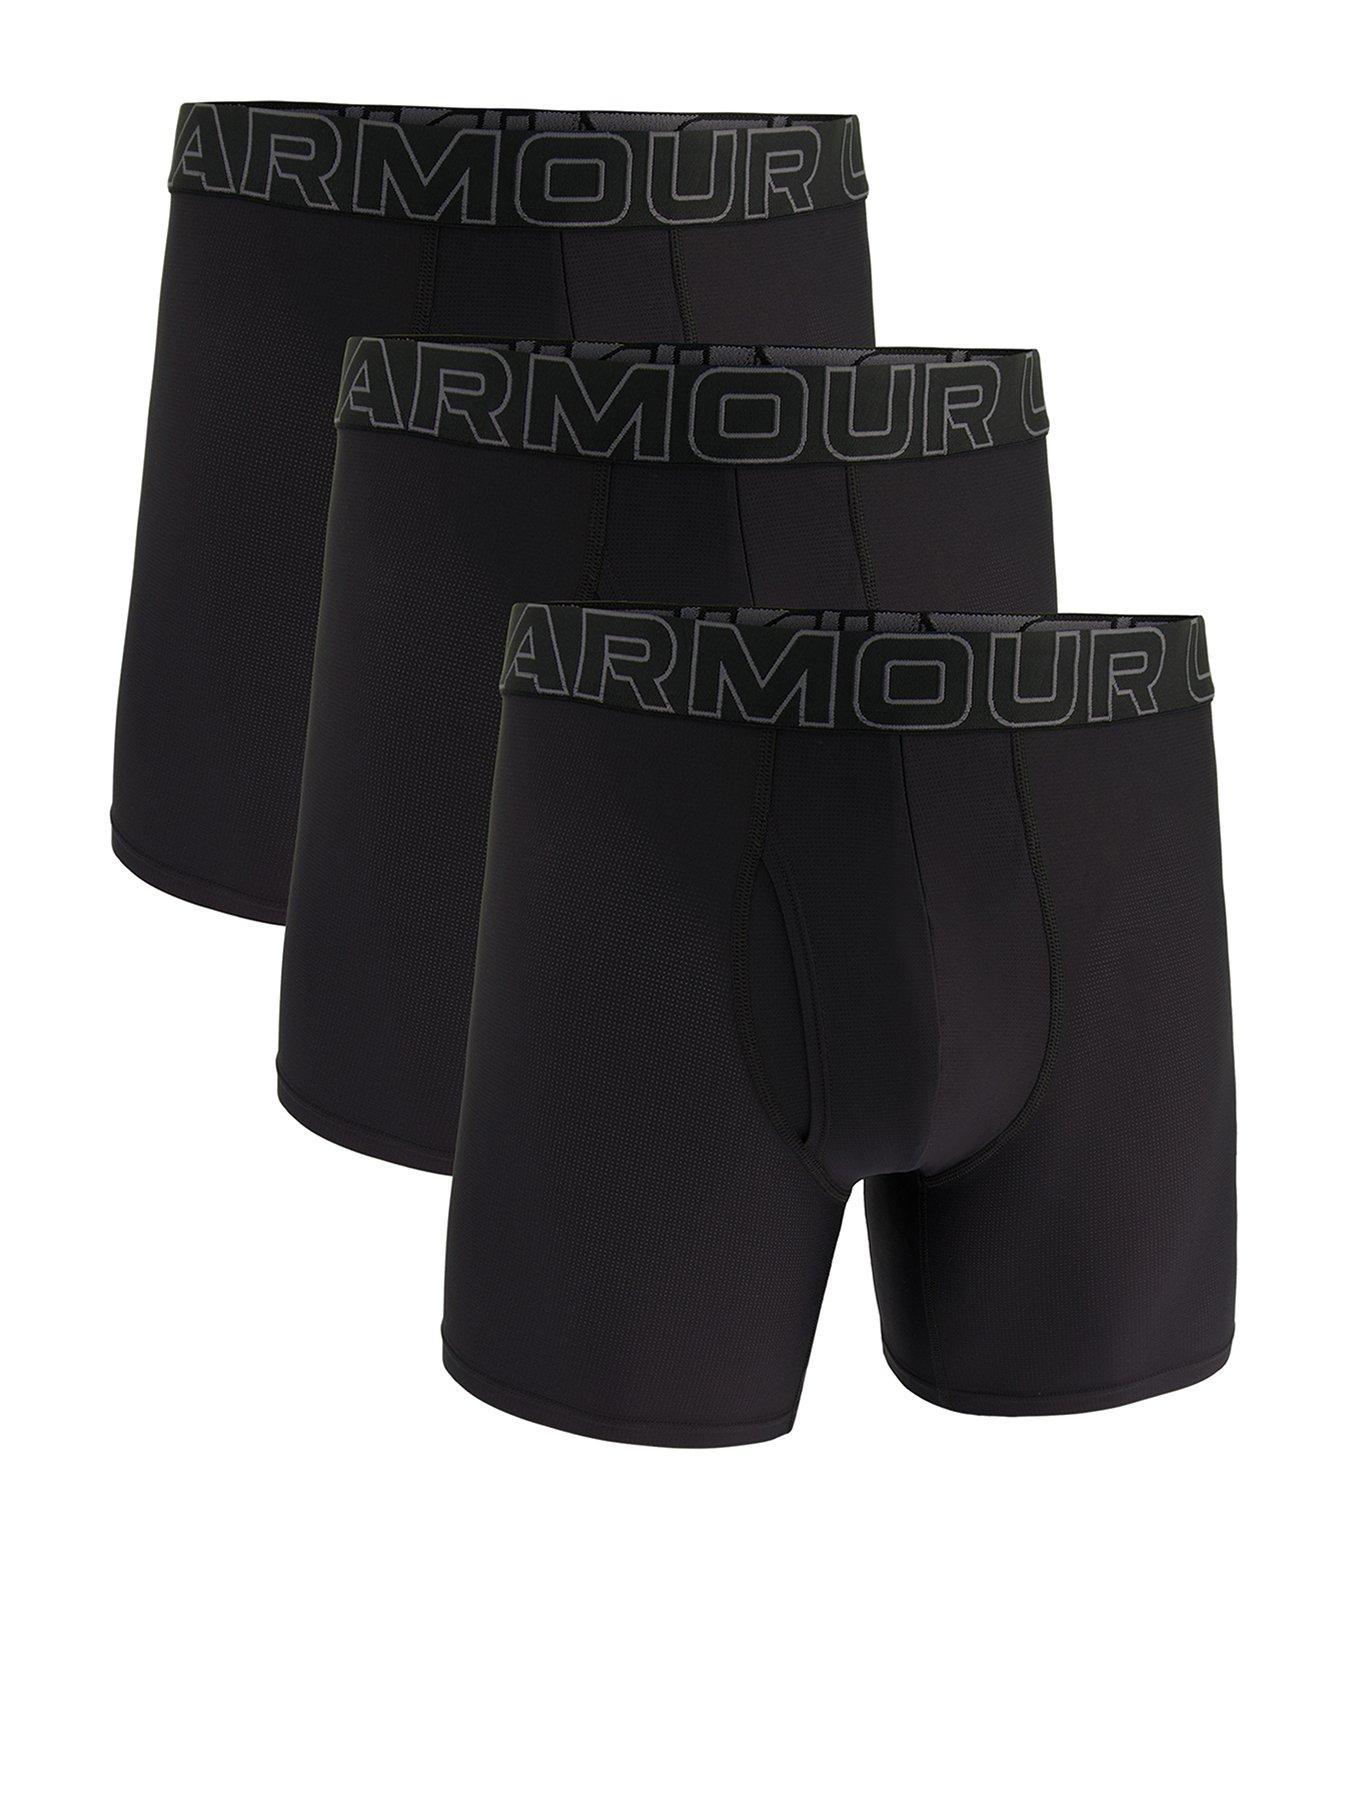 UNDER ARMOUR 3 Pack of Men's 6 Inch Performance Tech Mesh Solid Boxers - Black, Black, Size M, Men